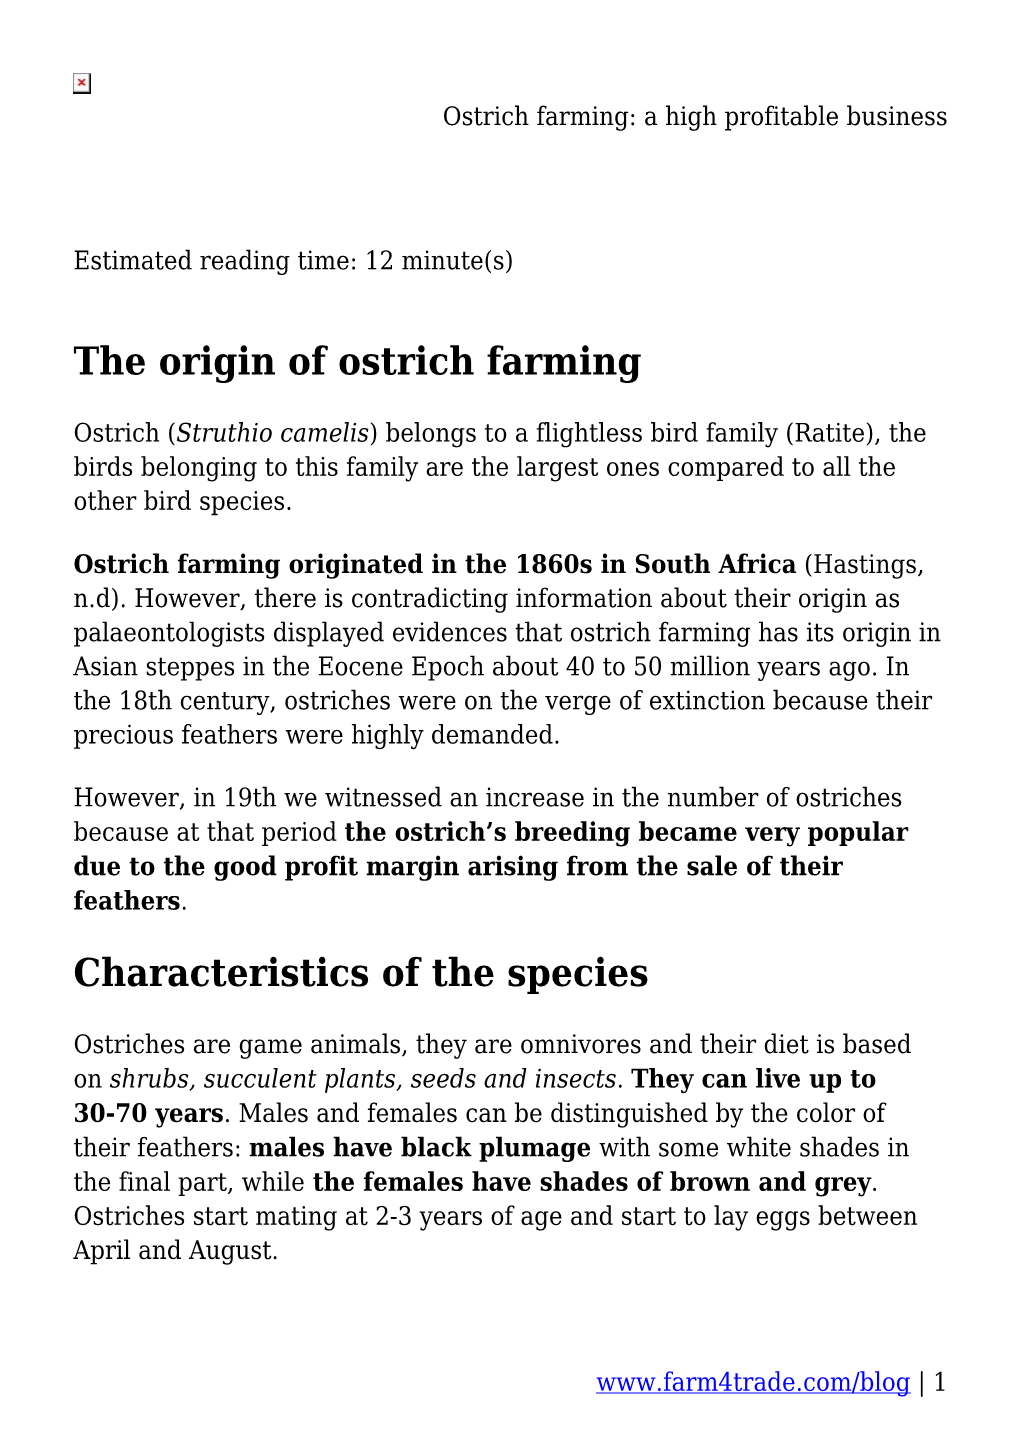 Ostrich Farming: a High Profitable Business